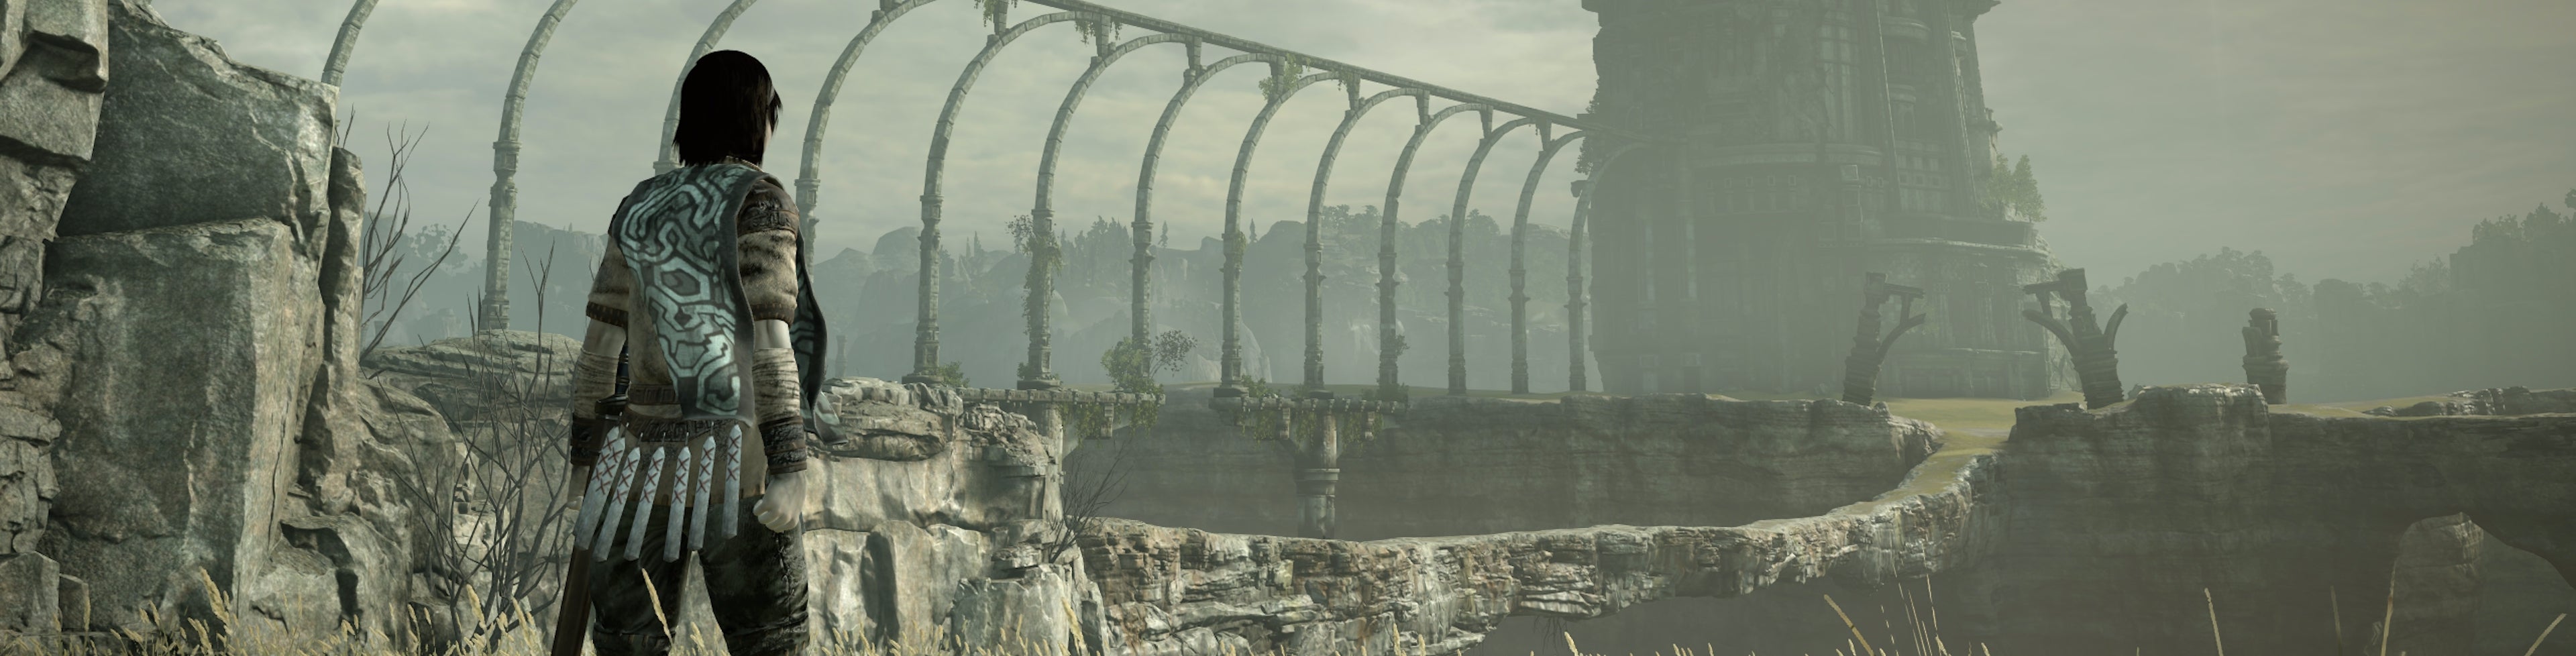 Imagen para Avance de Shadow of the Colossus